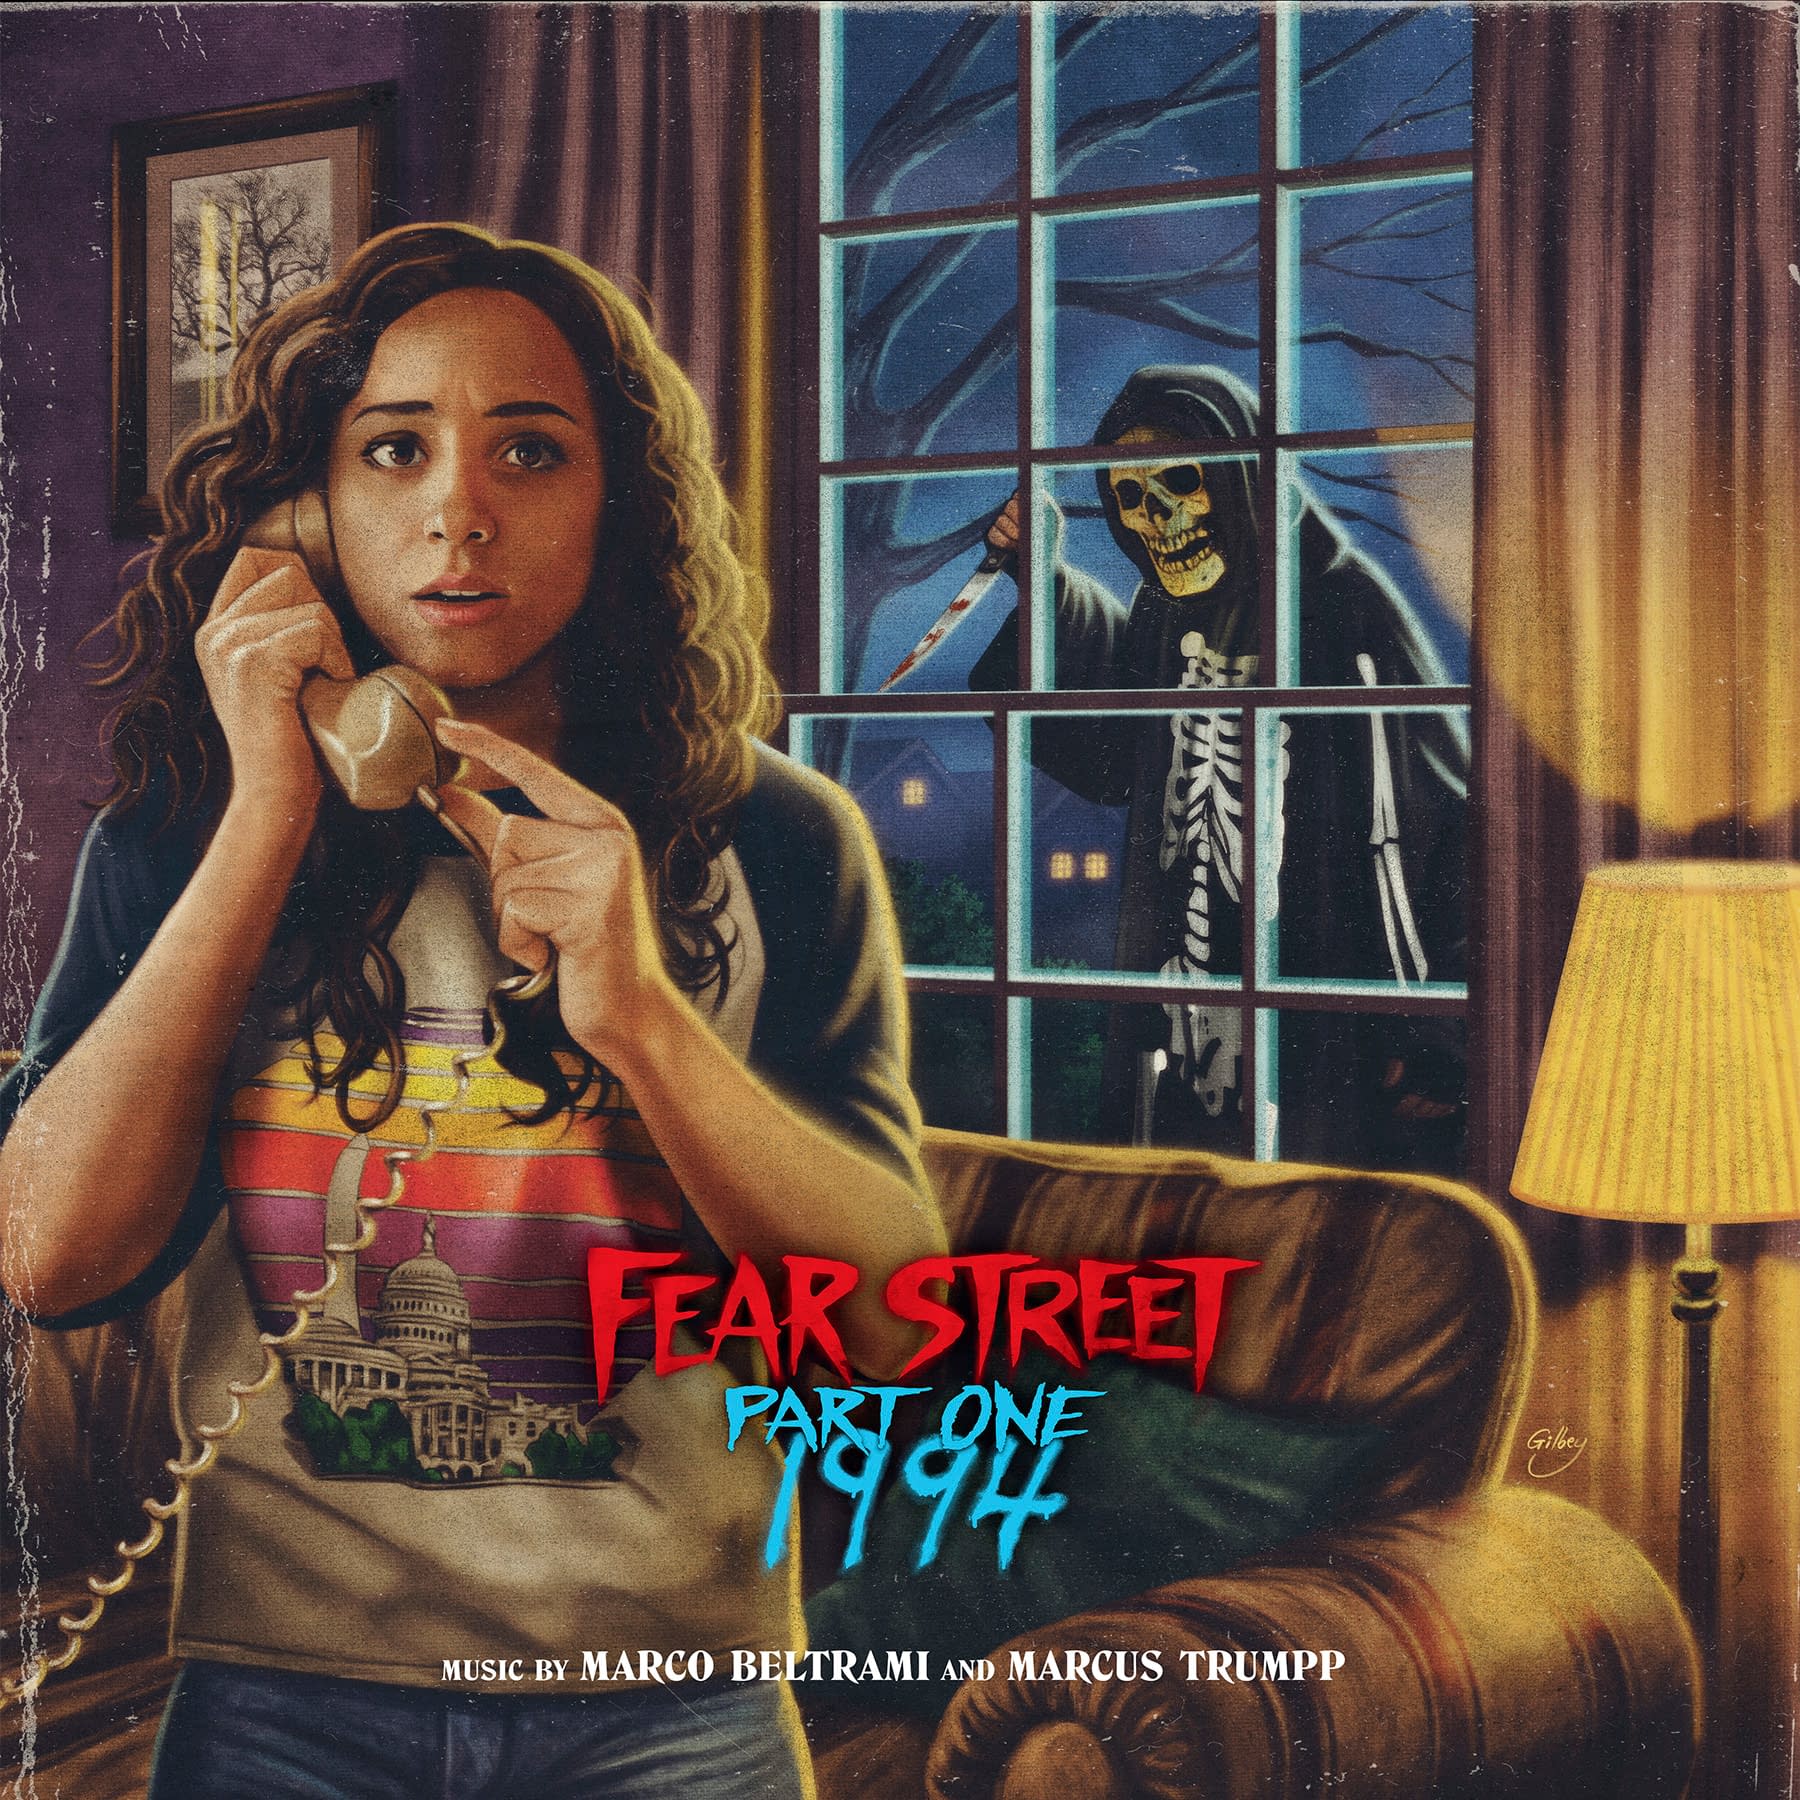 Fear Street Trilogy Soundtrack Releasing On Vinyl From Waxwork Records